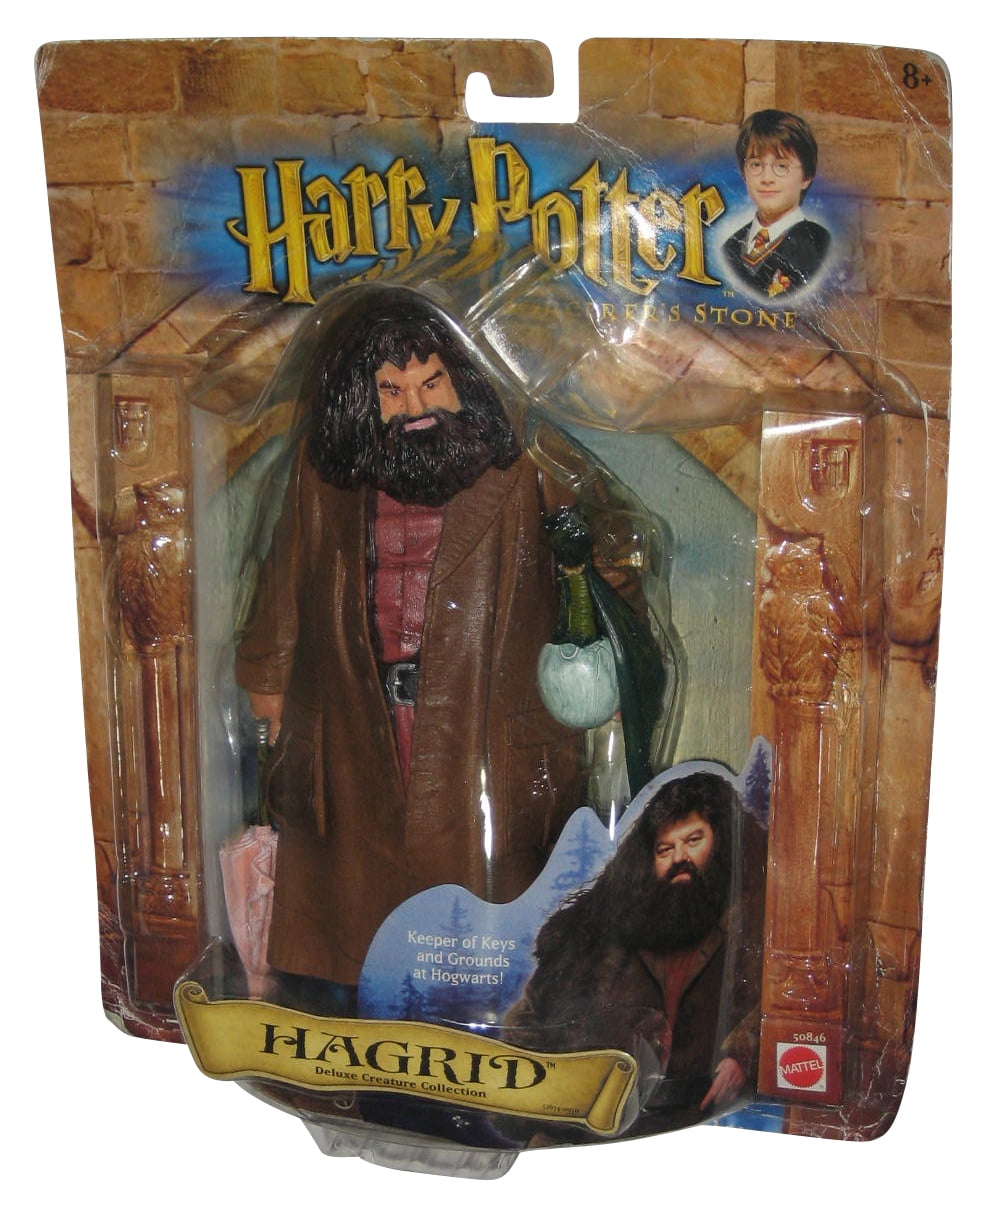 Ampère tentoonstelling adviseren Harry Potter Hagrid Deluxe Creature Movie (2001) Mattel Action Figure -  Walmart.com